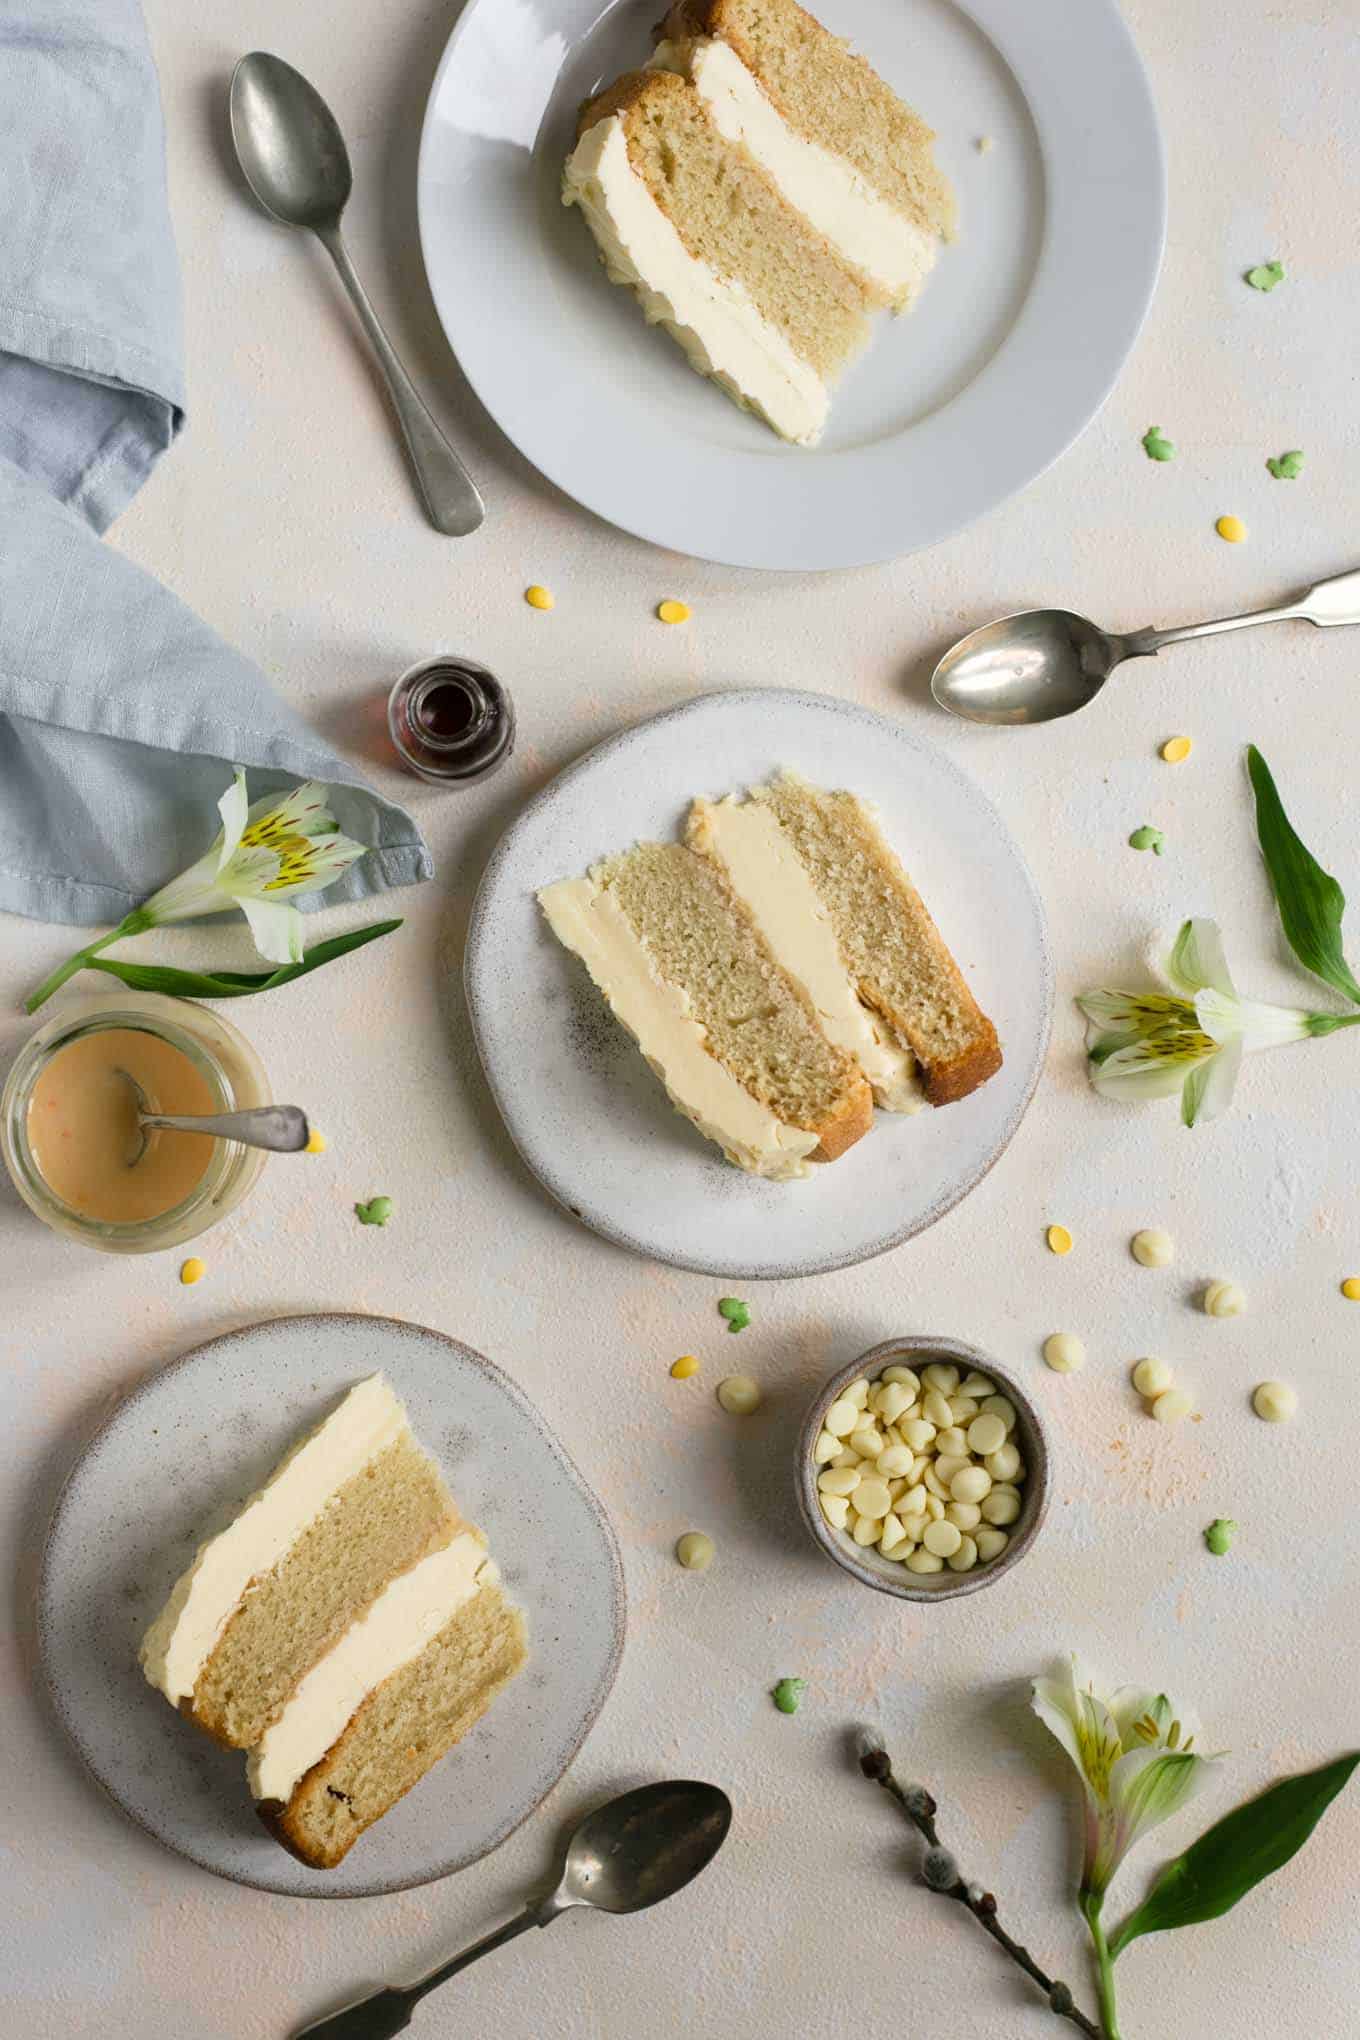 Delicious and indulgent white chocolate cake with blood orange curd #vegan #foodphotography #cake #dairyfree | via @annabanana.co